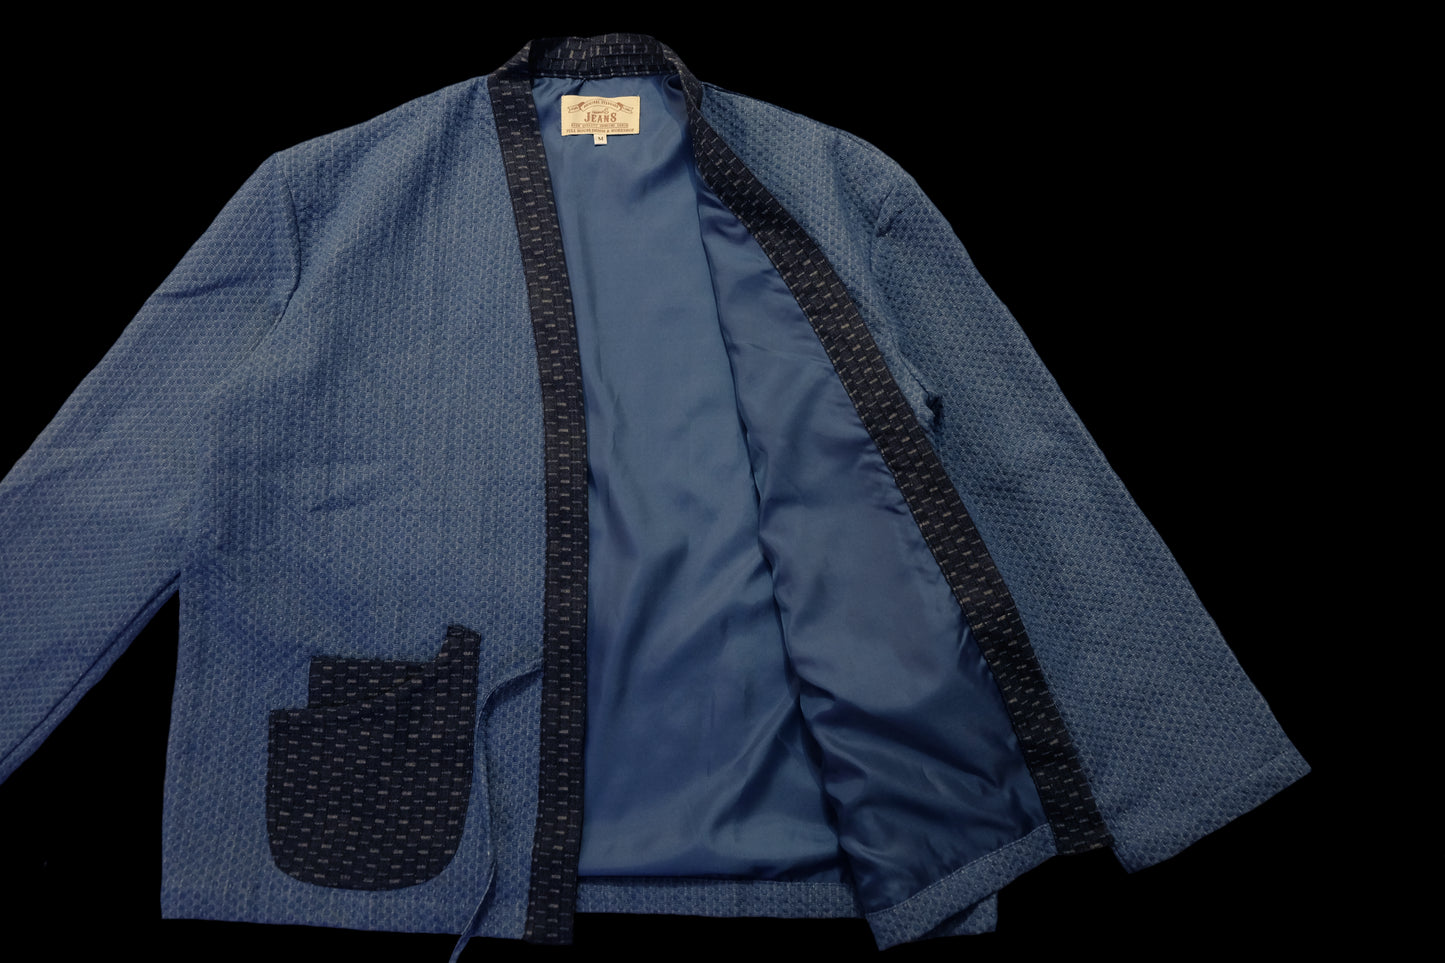 Cross Pattern Weaving Kimono